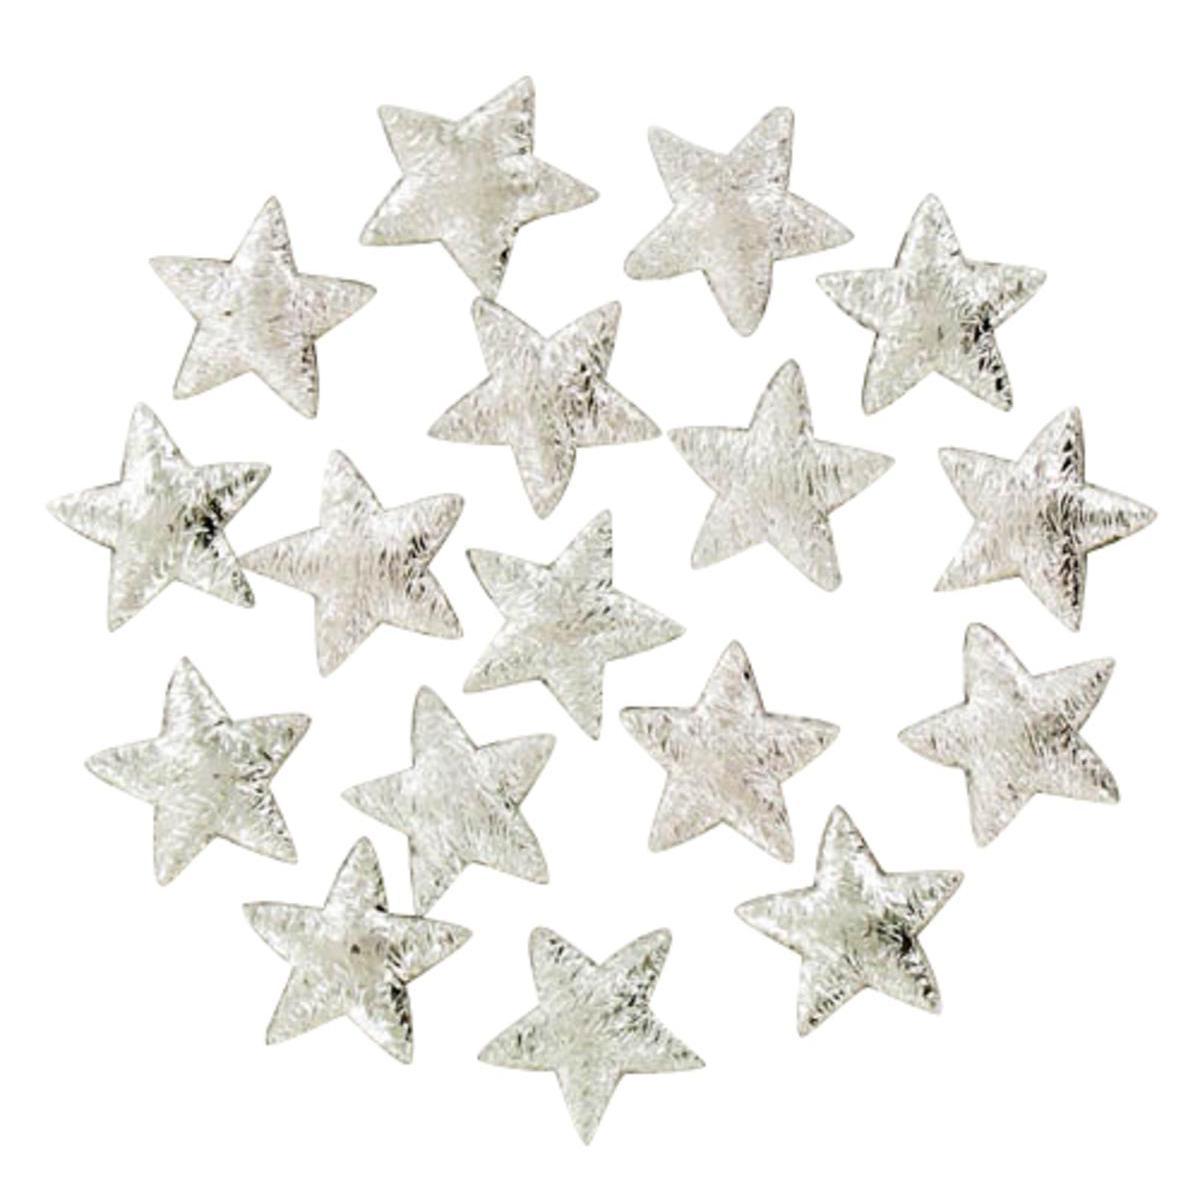 Lot de 70 étoiles textiles scintillantes en coton - 2 cm - Gris